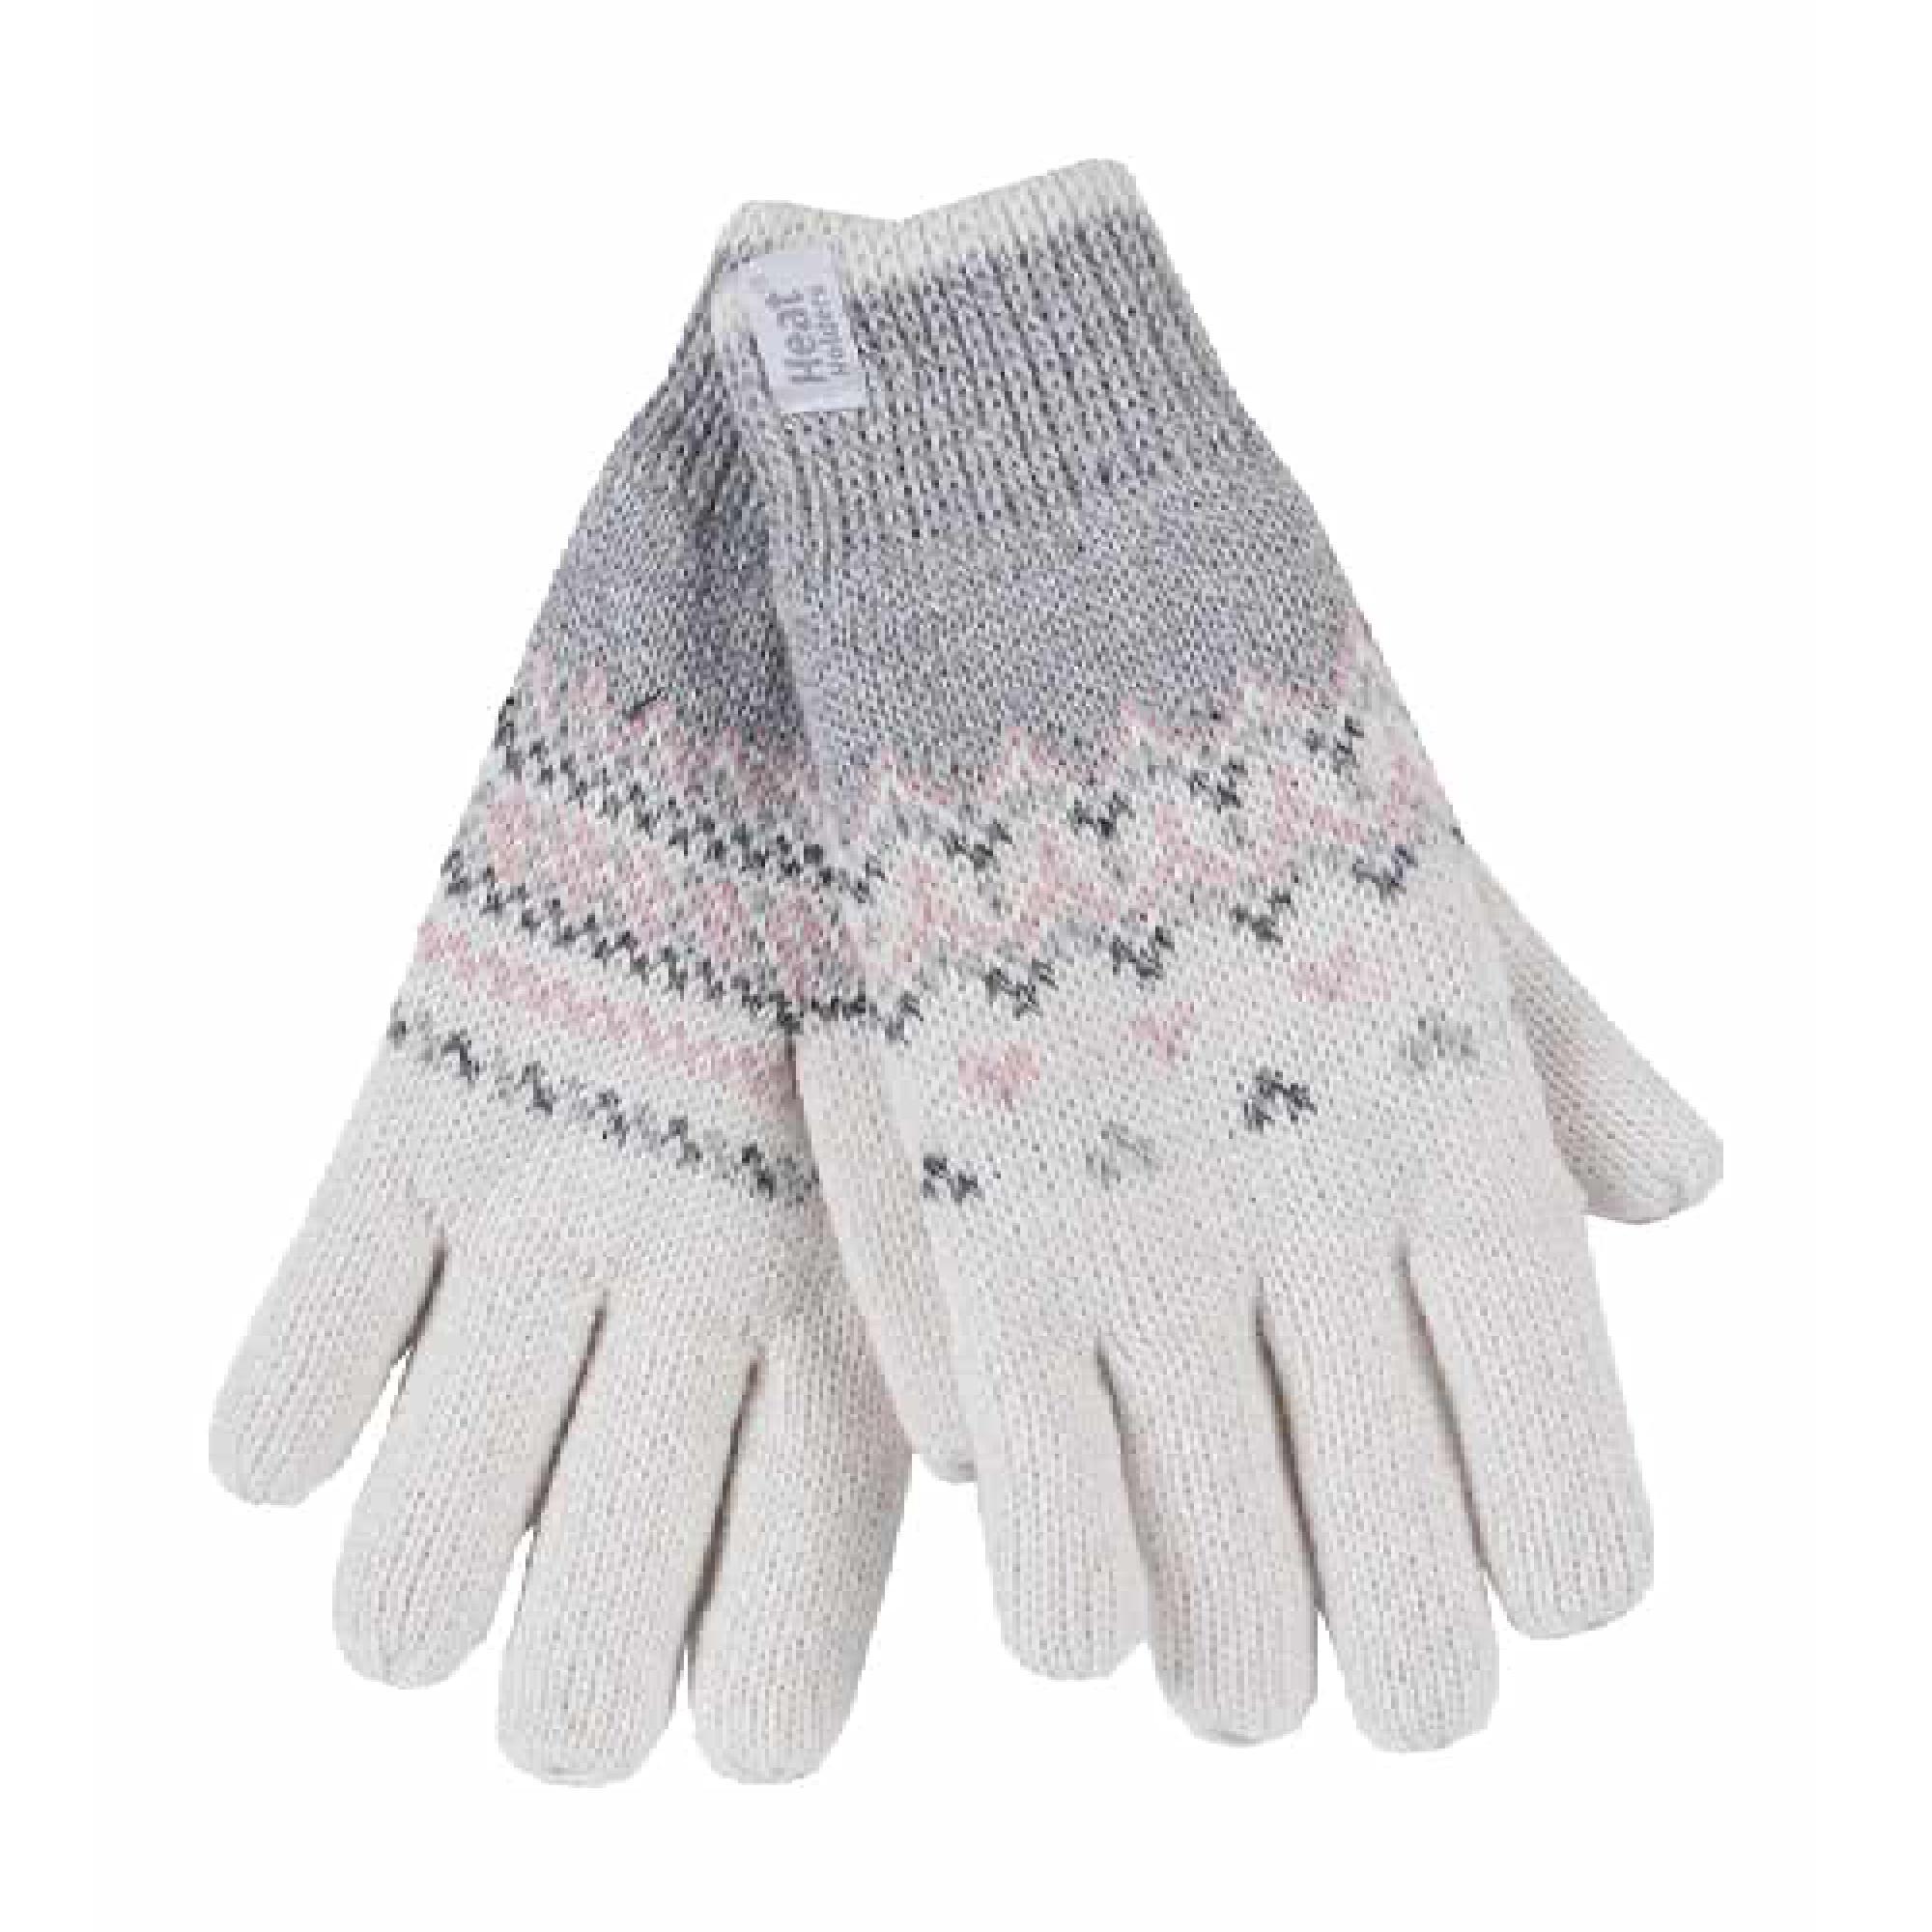 Ladies Fairisle Fleece Lined Knitted Warm Winter Thermal Gloves 1/4